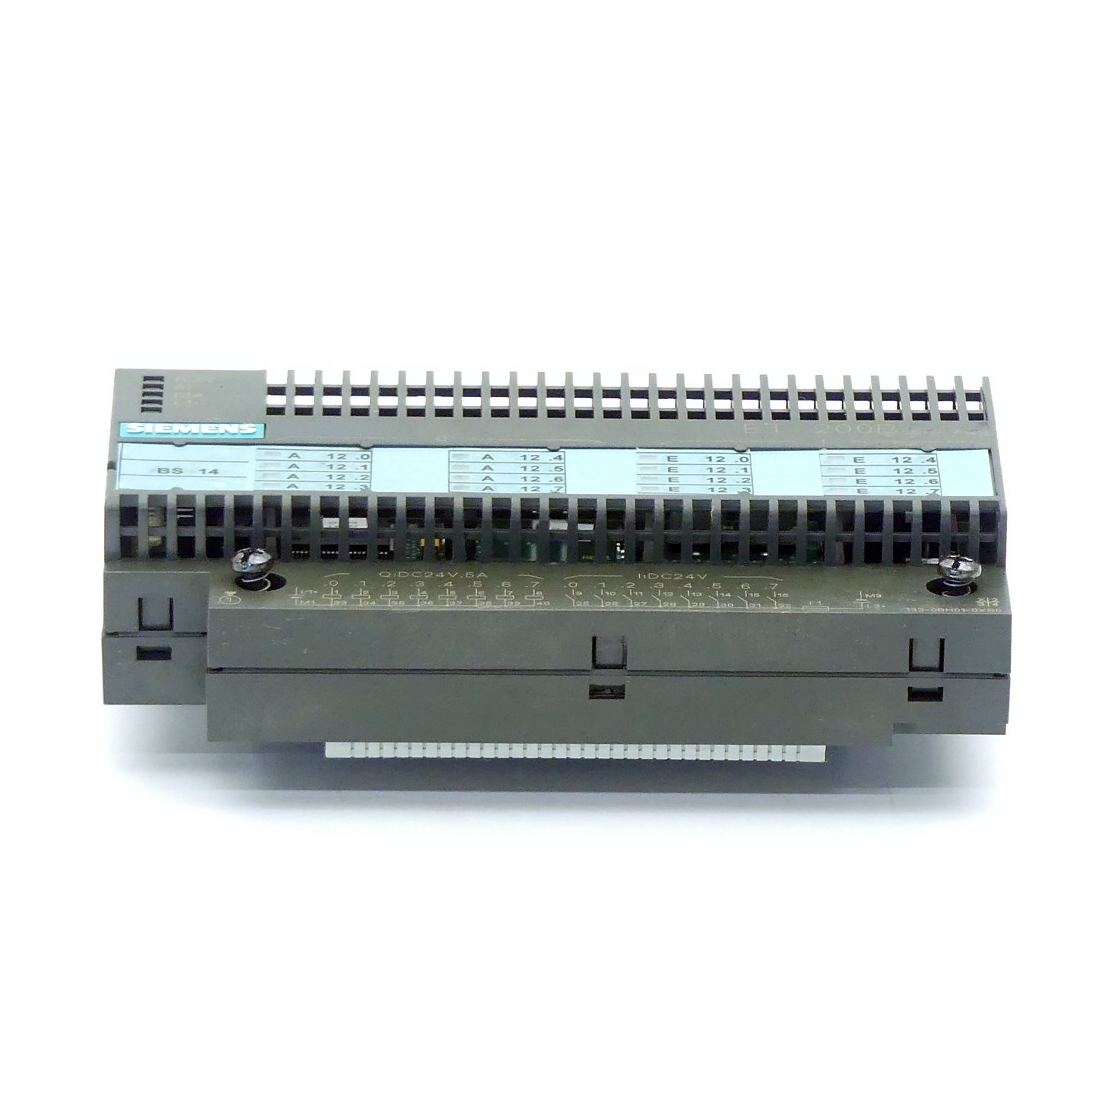 Digital electronic module ET 200B-8DI/8D0 